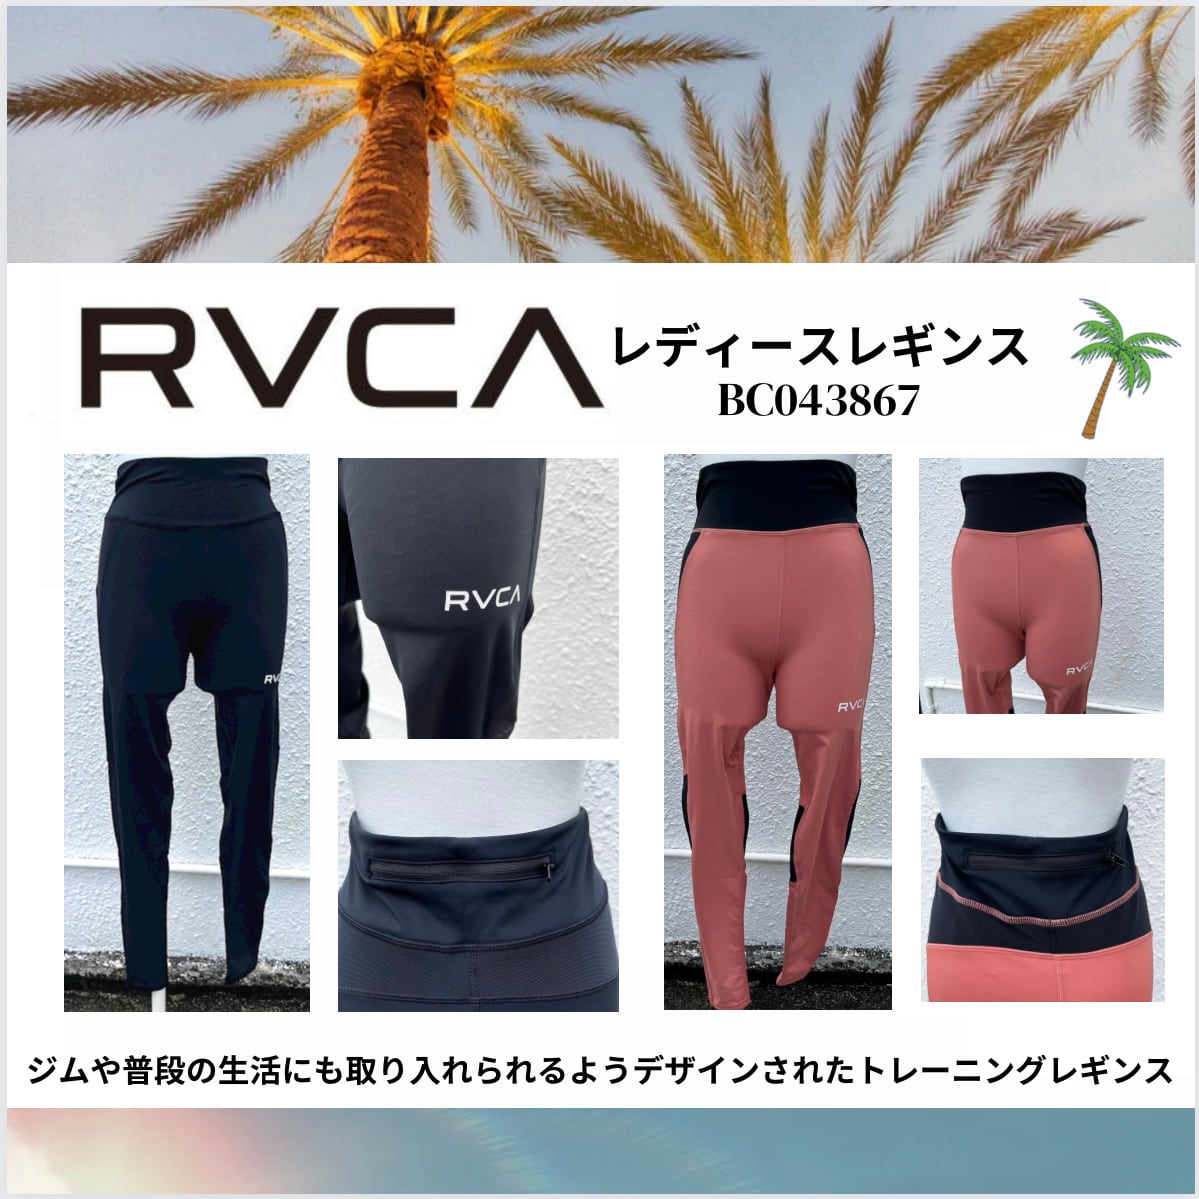 RVCA レギンス - スパッツ